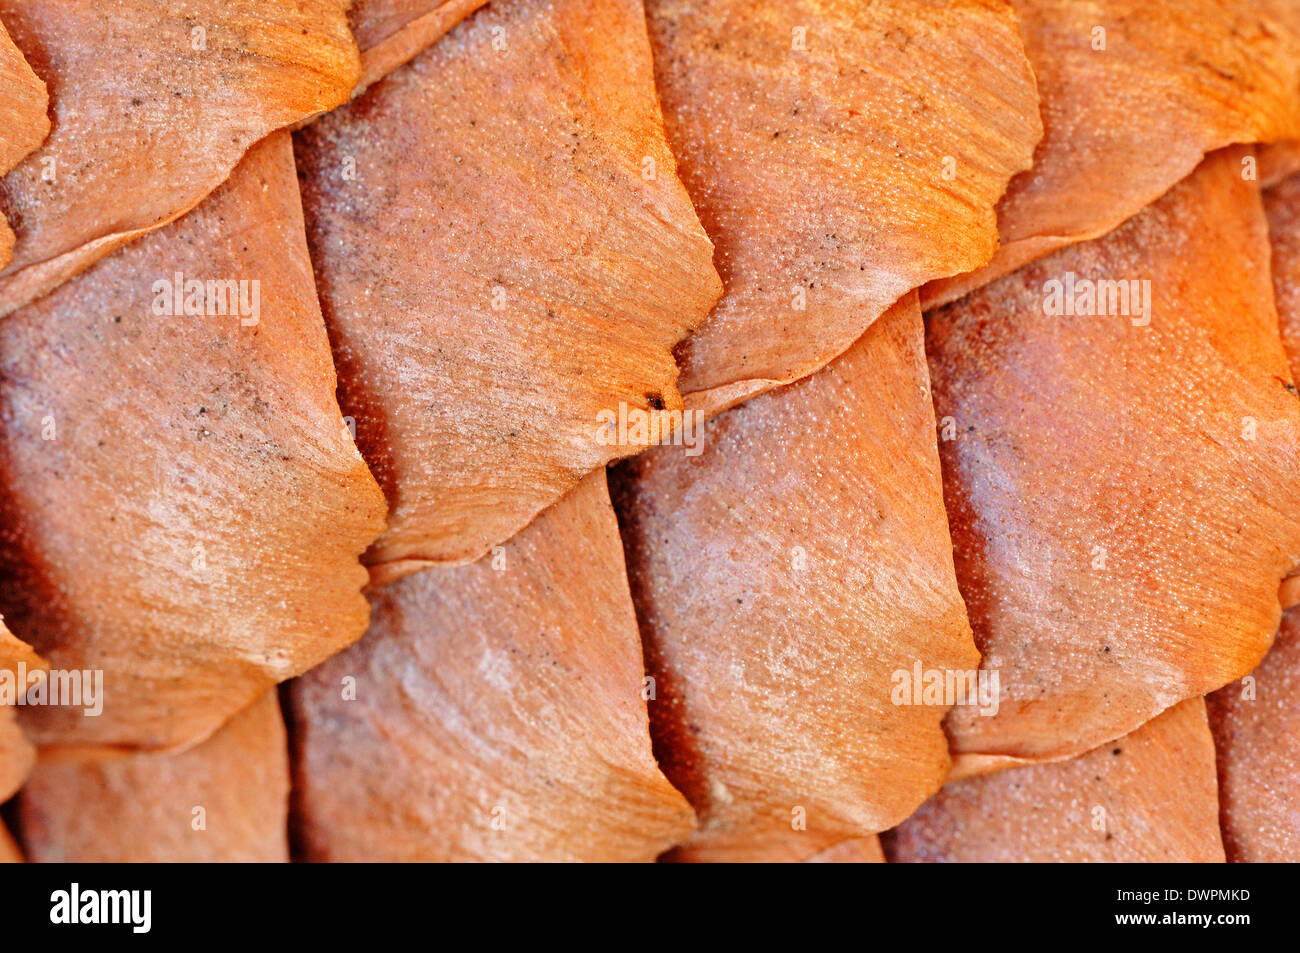 Norway Spruce or European Spruce (Picea abies), cone detail, North Rhine-Westphalia, Germany Stock Photo